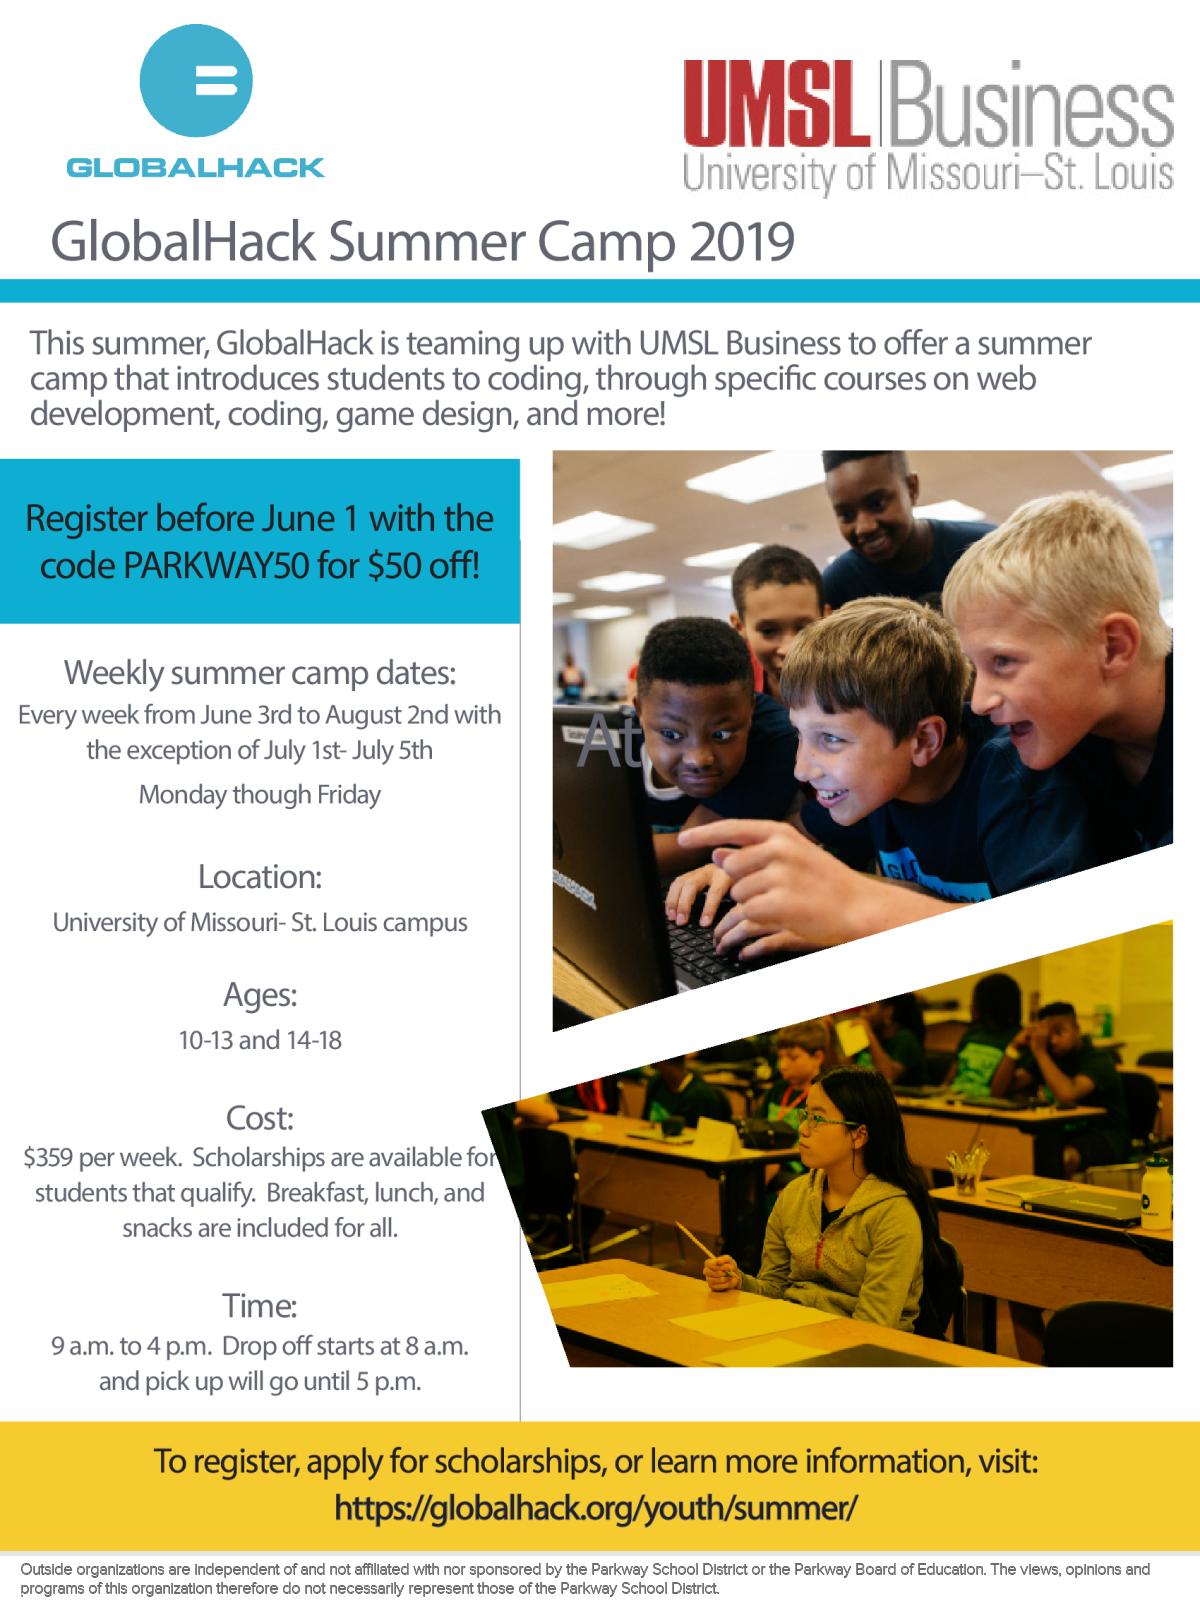 Globalhack Coding Camp 2019